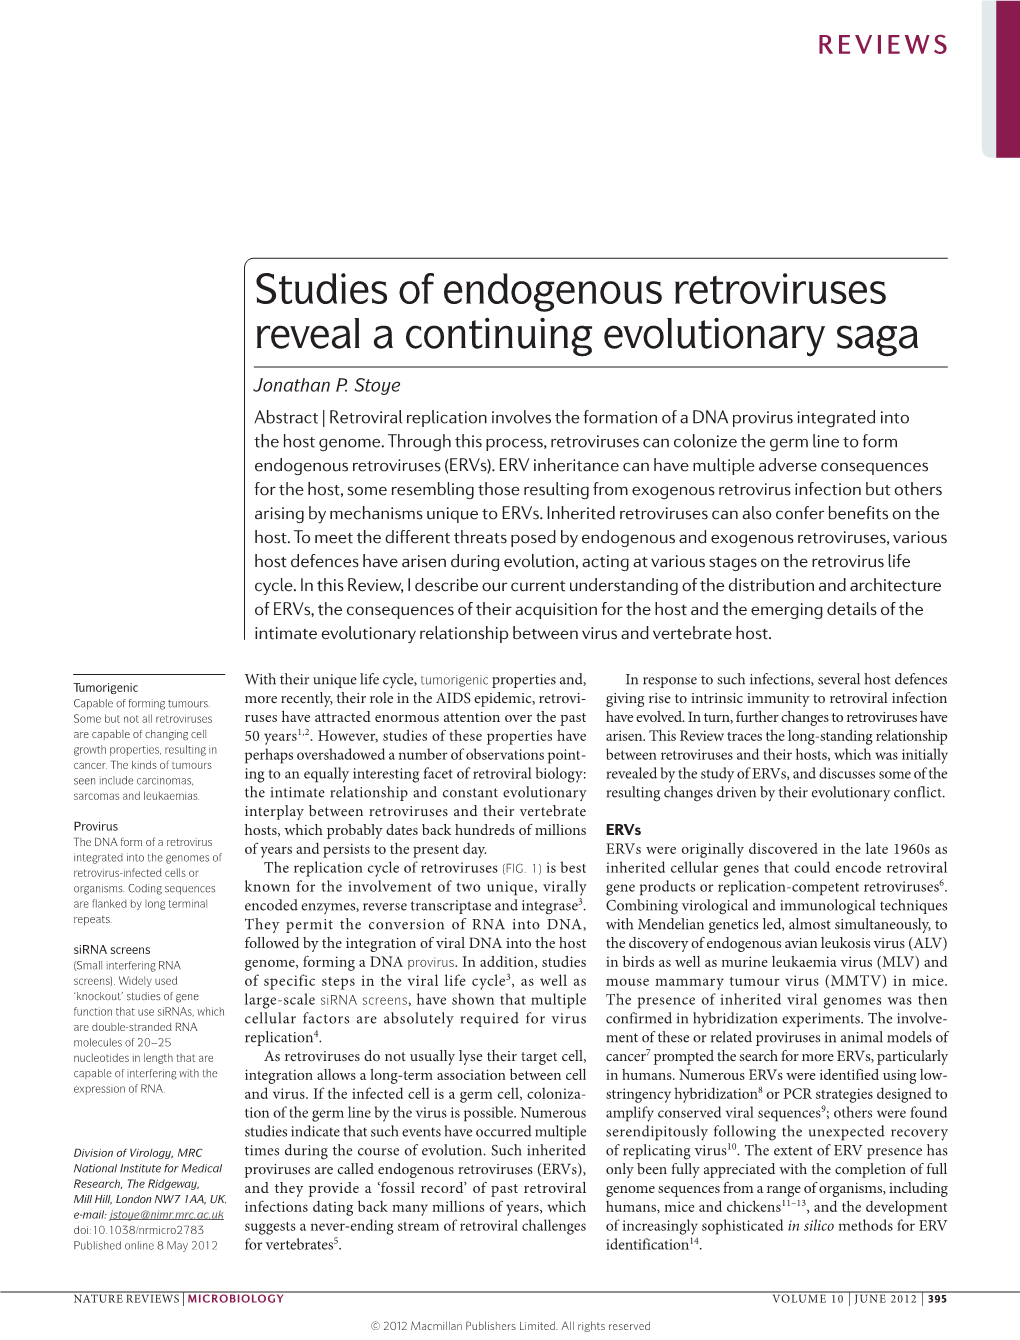 Studies of Endogenous Retroviruses Reveal a Continuing Evolutionary Saga